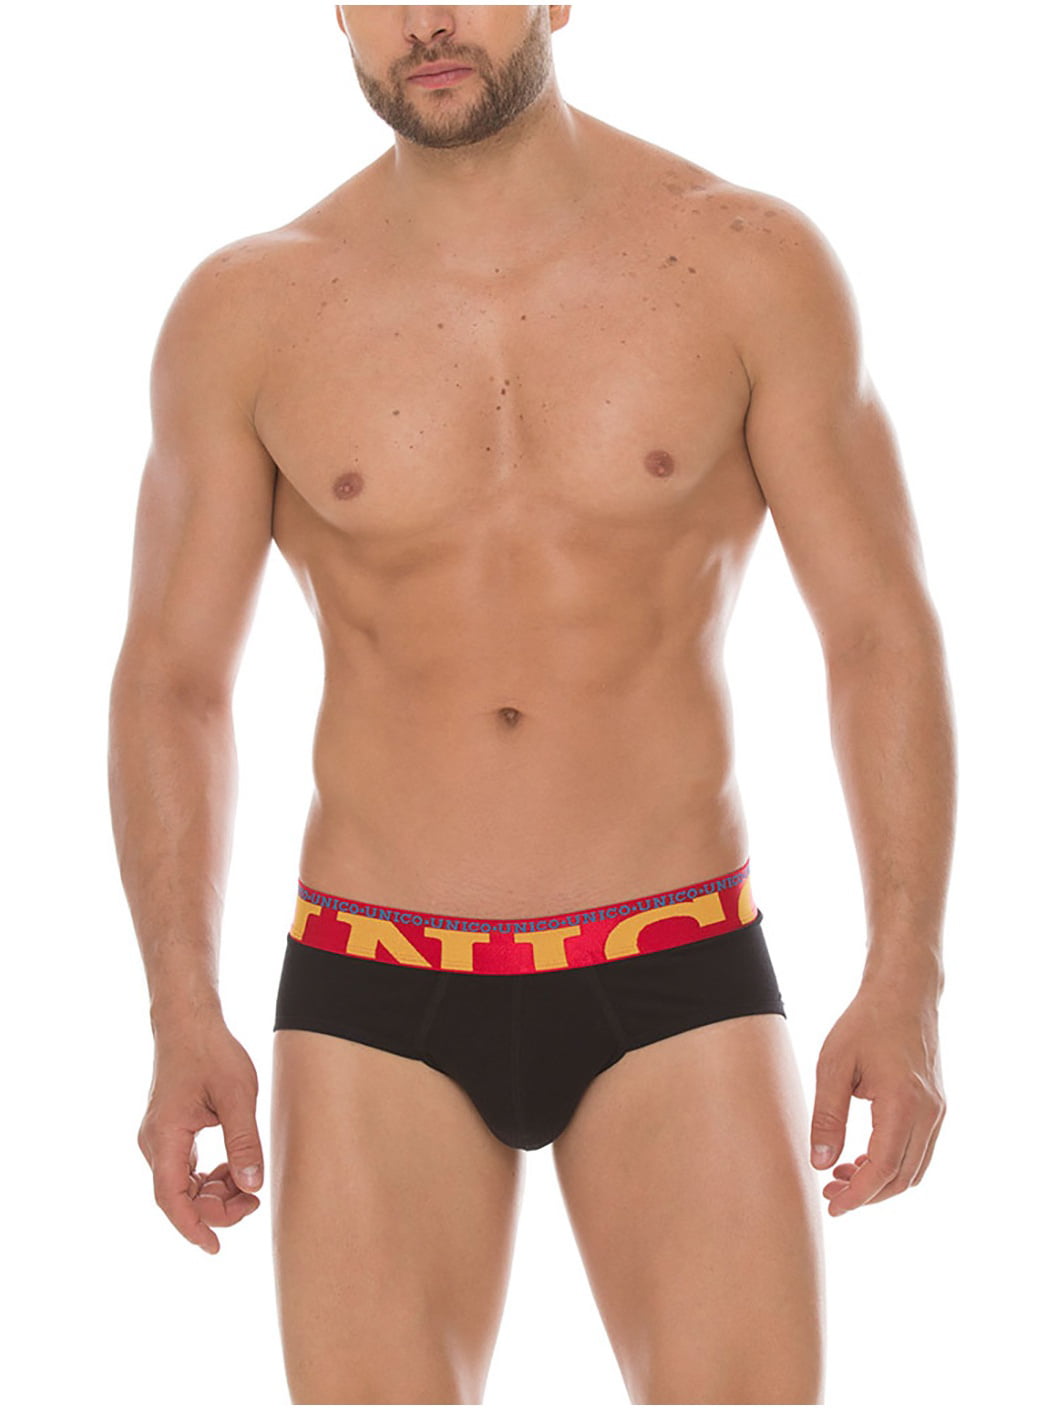 Mundo Unico Underwear for Men Cotton Medium Boxer Briefs Ropa Interior de Hombre 